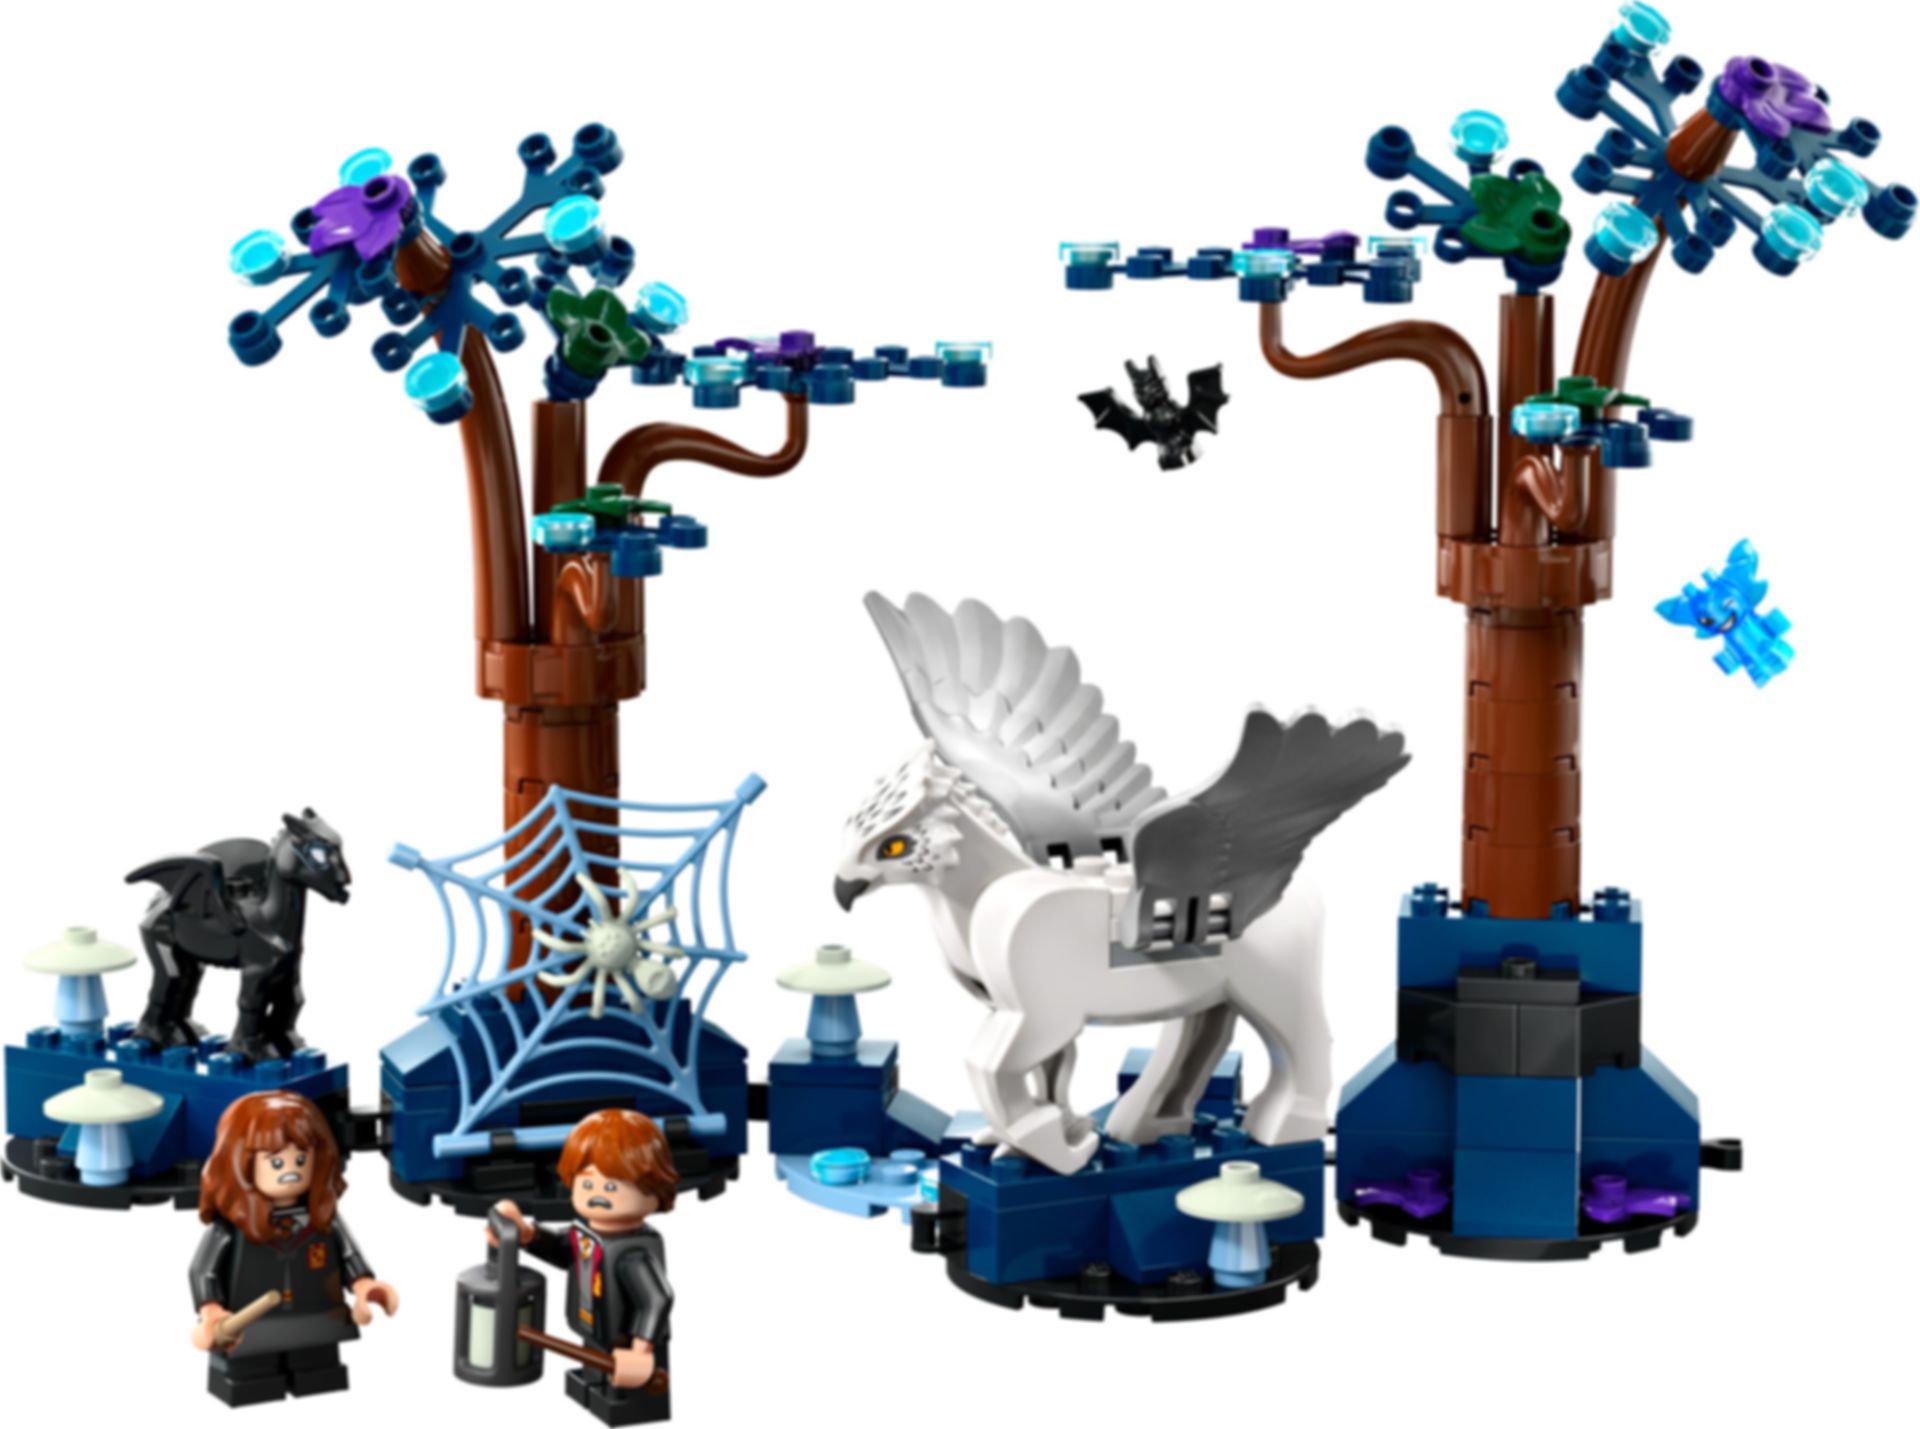 LEGO® Harry Potter™ Der verbotene Wald: Magische Wesen komponenten